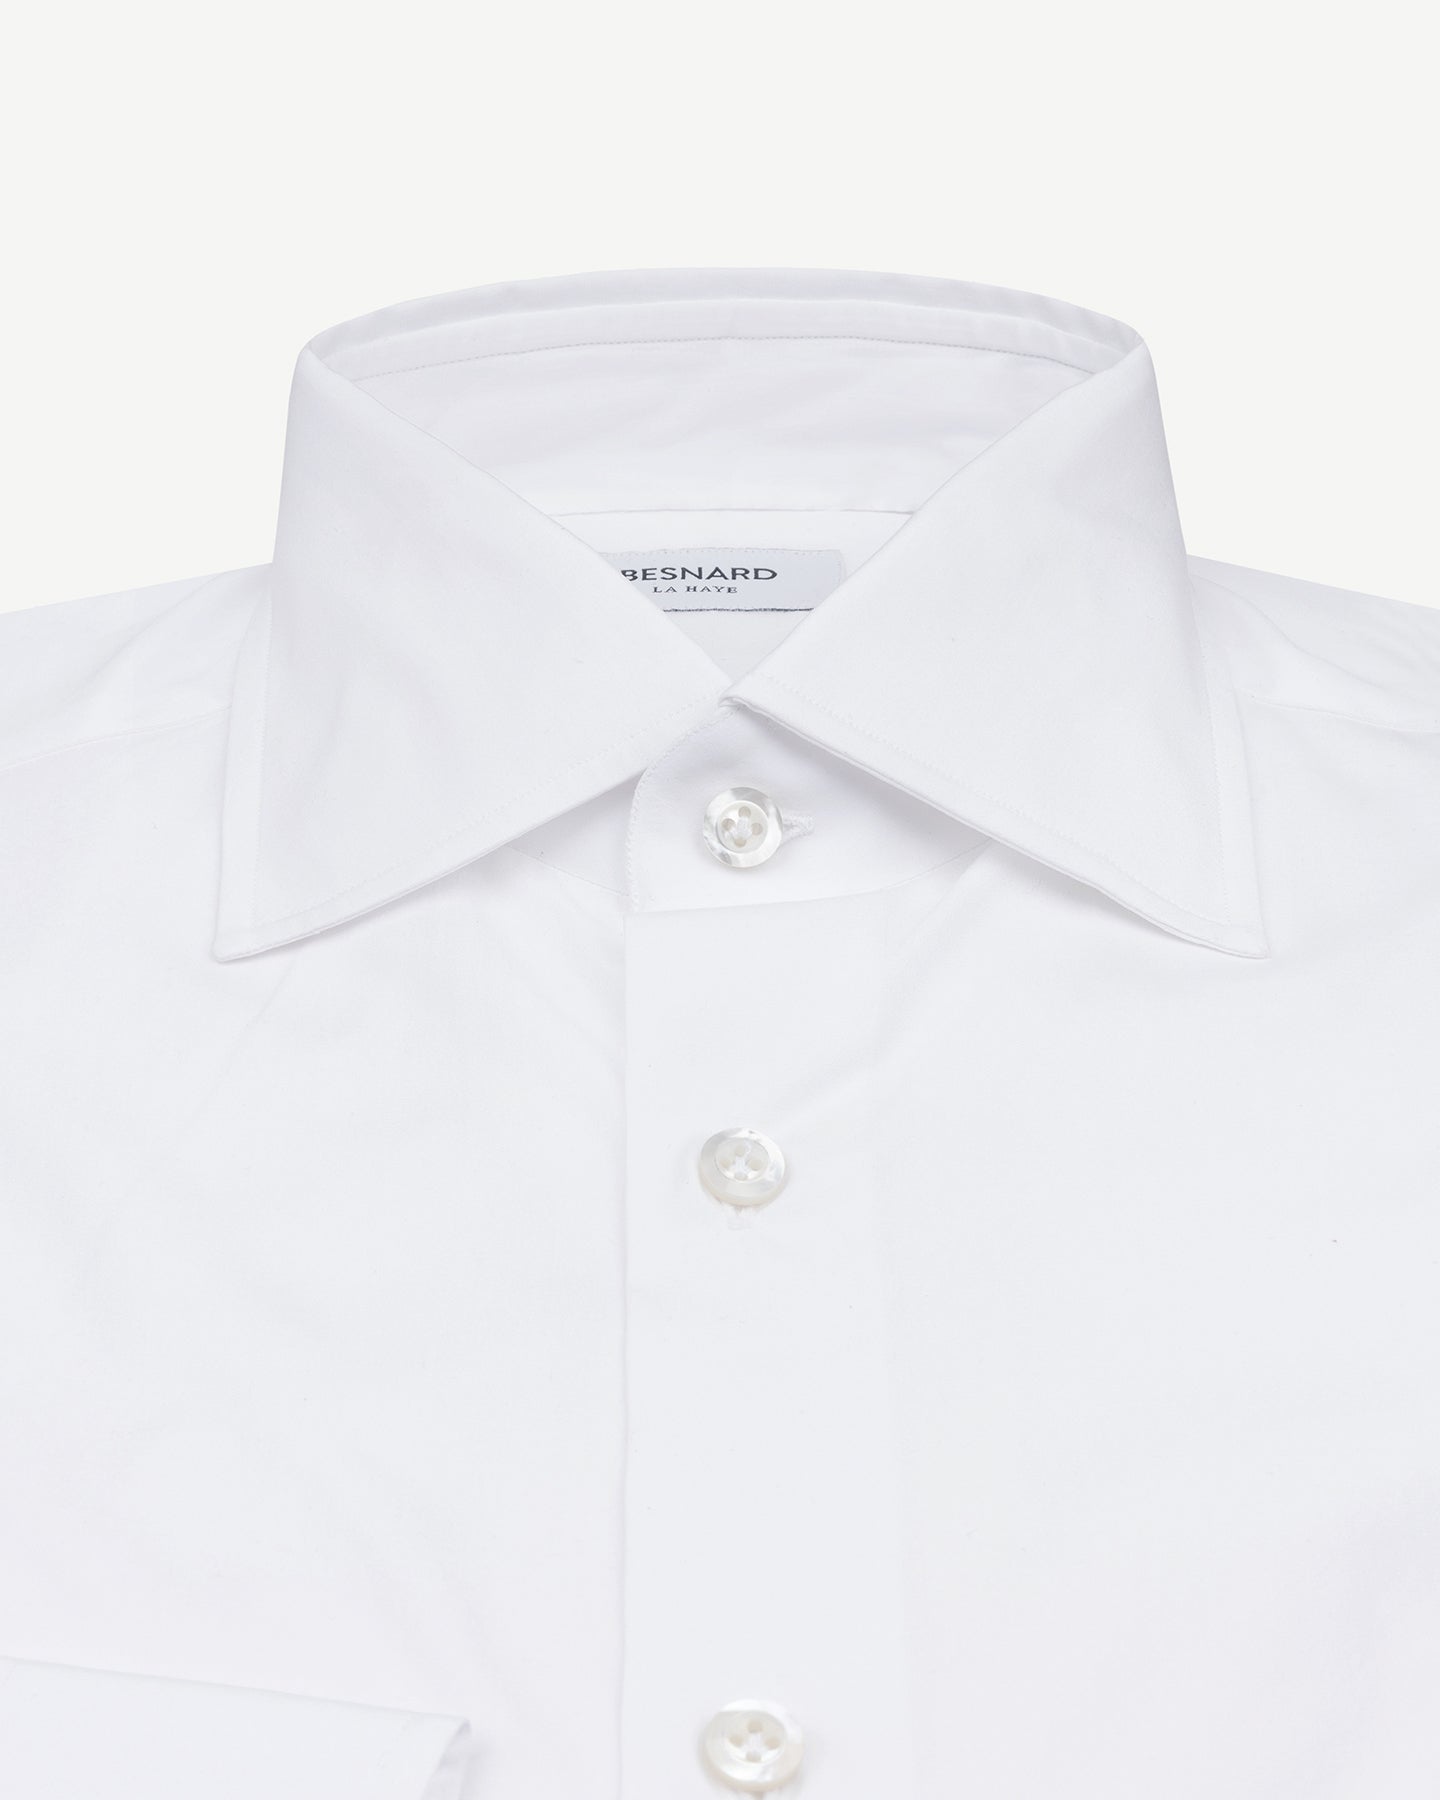 White poplin dress shirt with spread collar